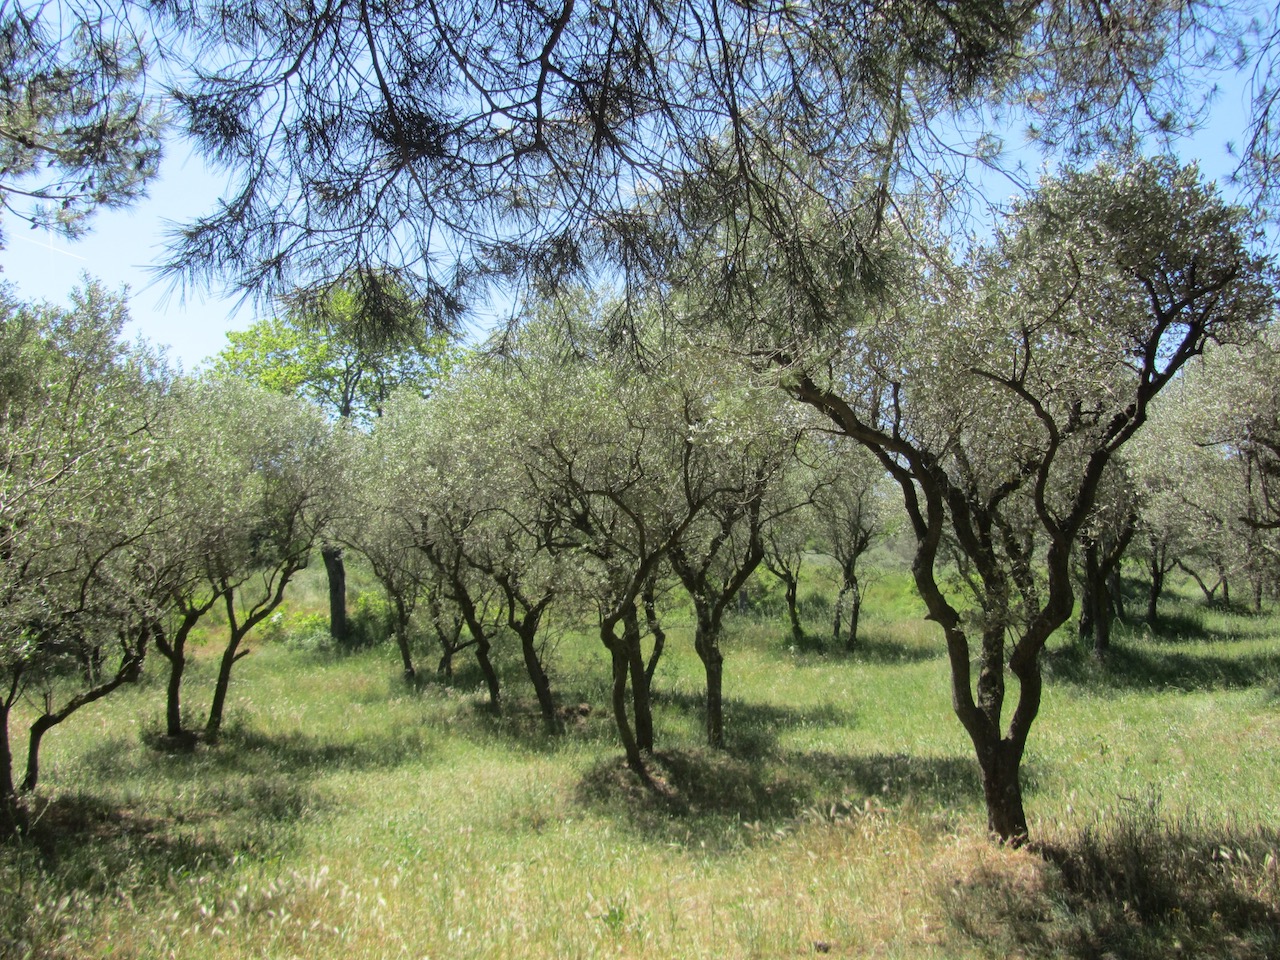 Olive grove painted by Van Gogh